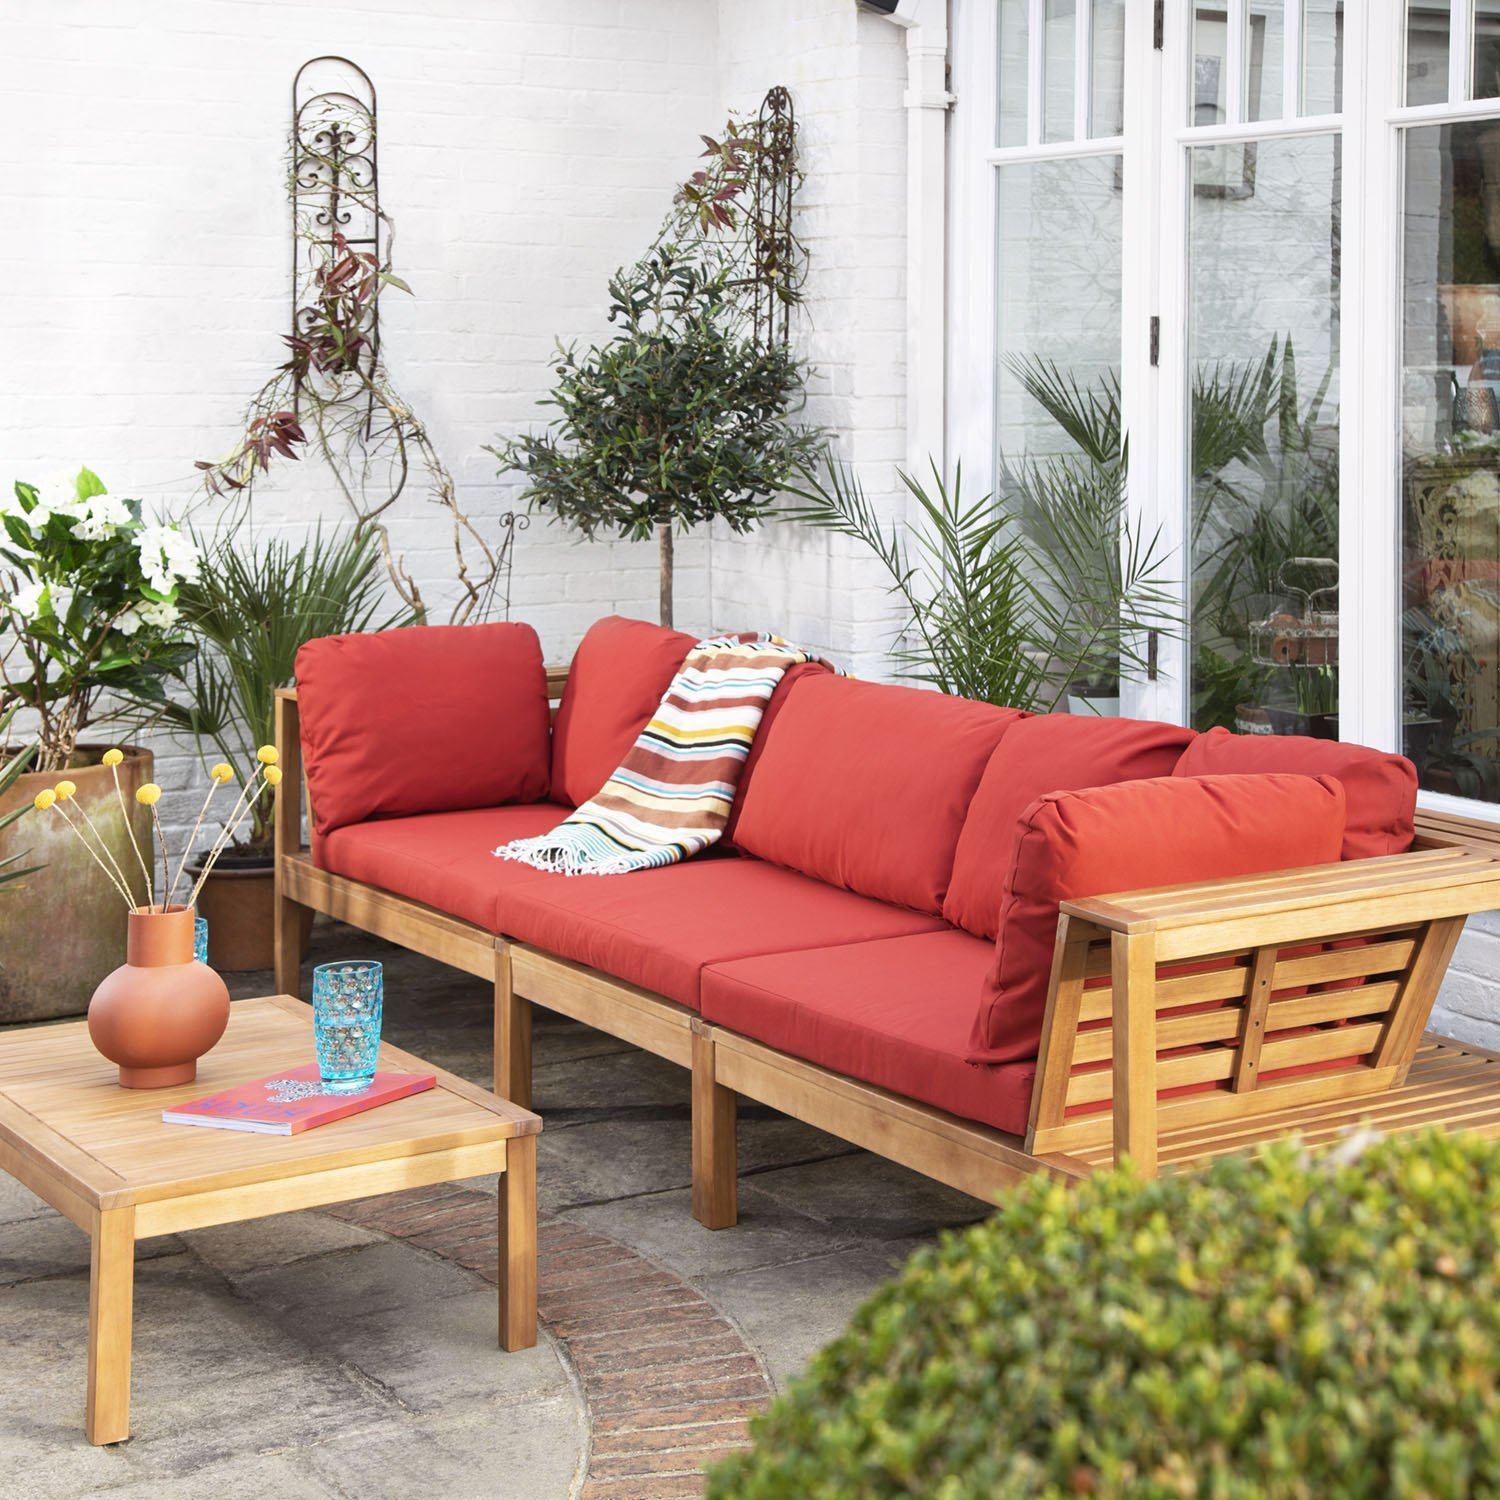 Dakota outdoor sofa set with cream parasol - acacia wood